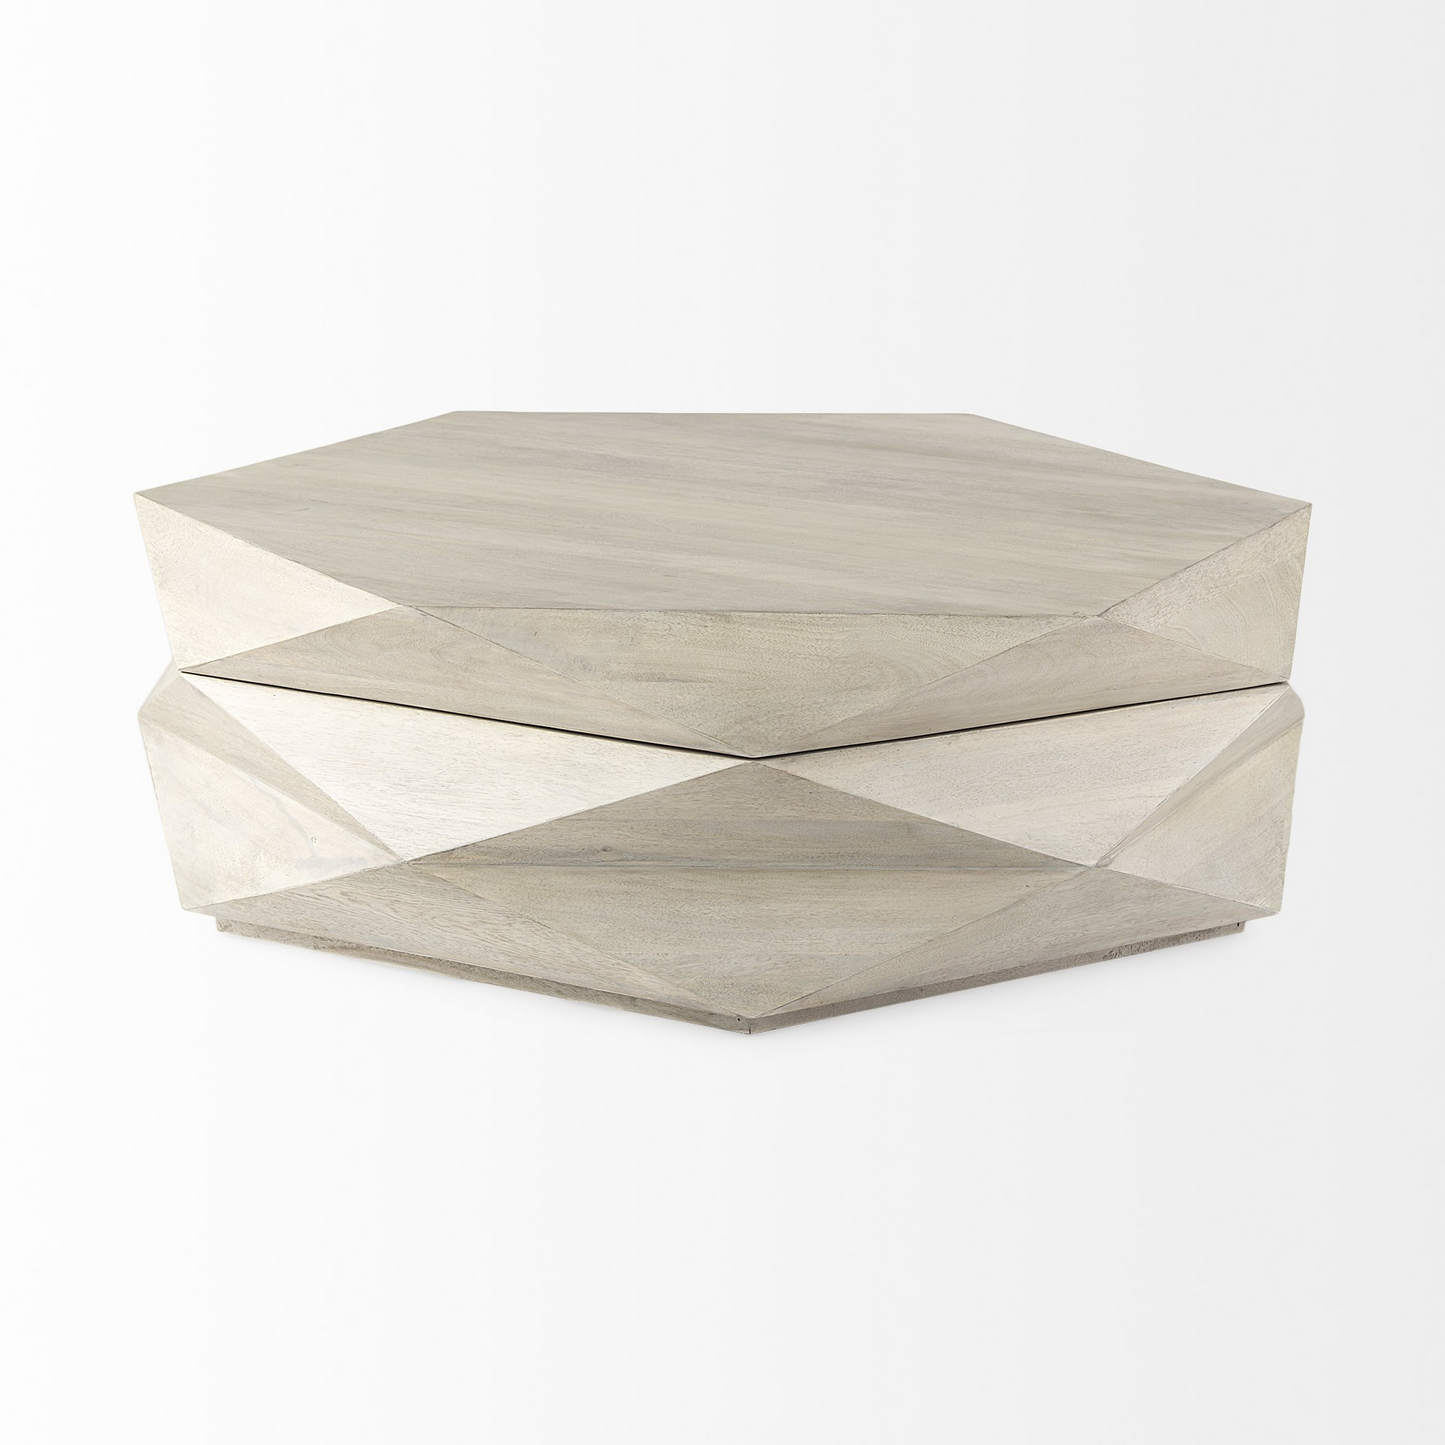 "Mod Geometric Whitewash Solid Wood Coffee Table"